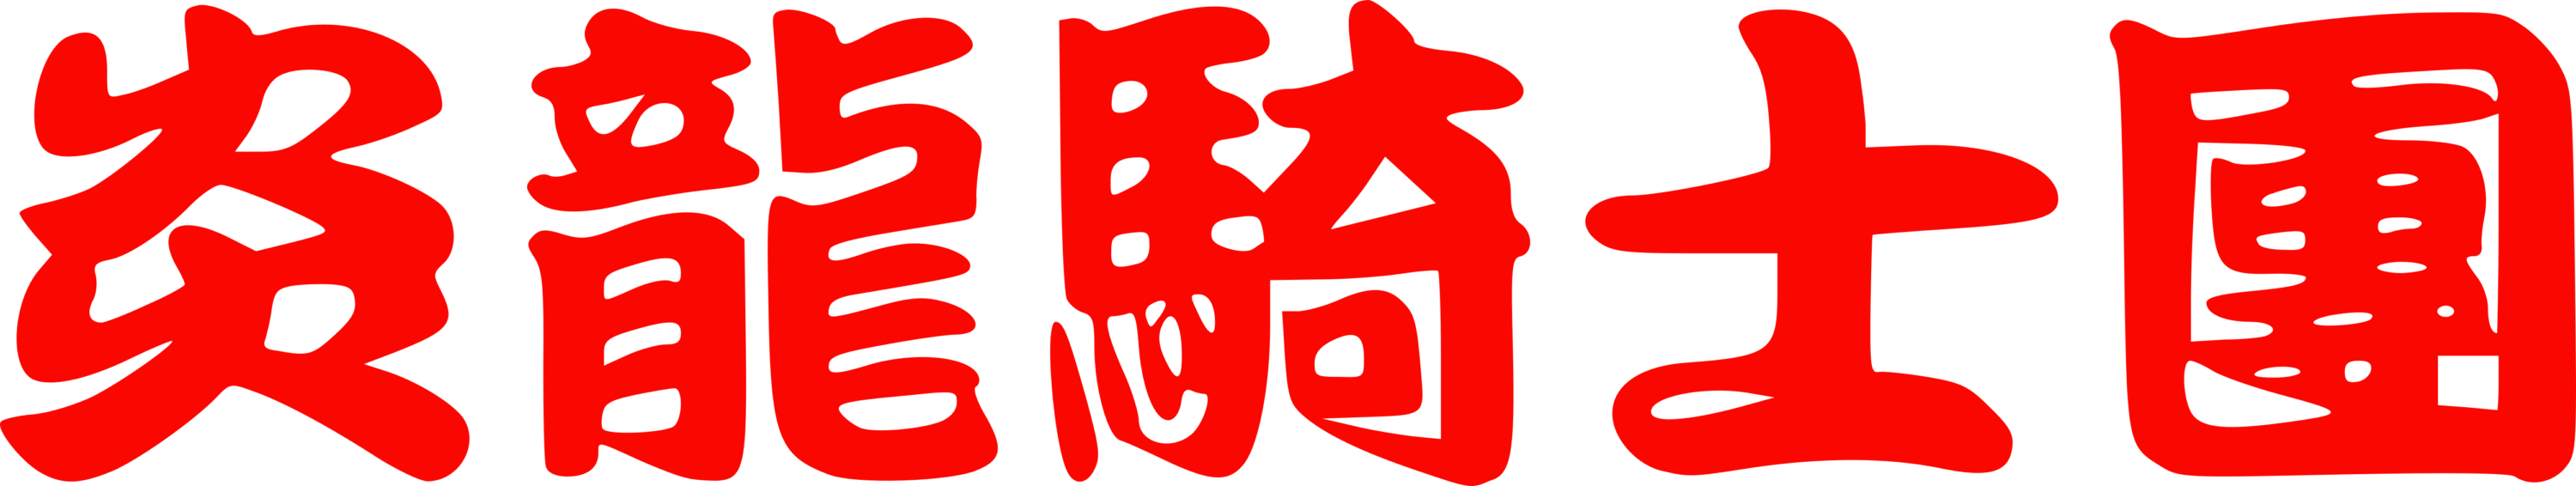 Flame Dragon Knights Logo